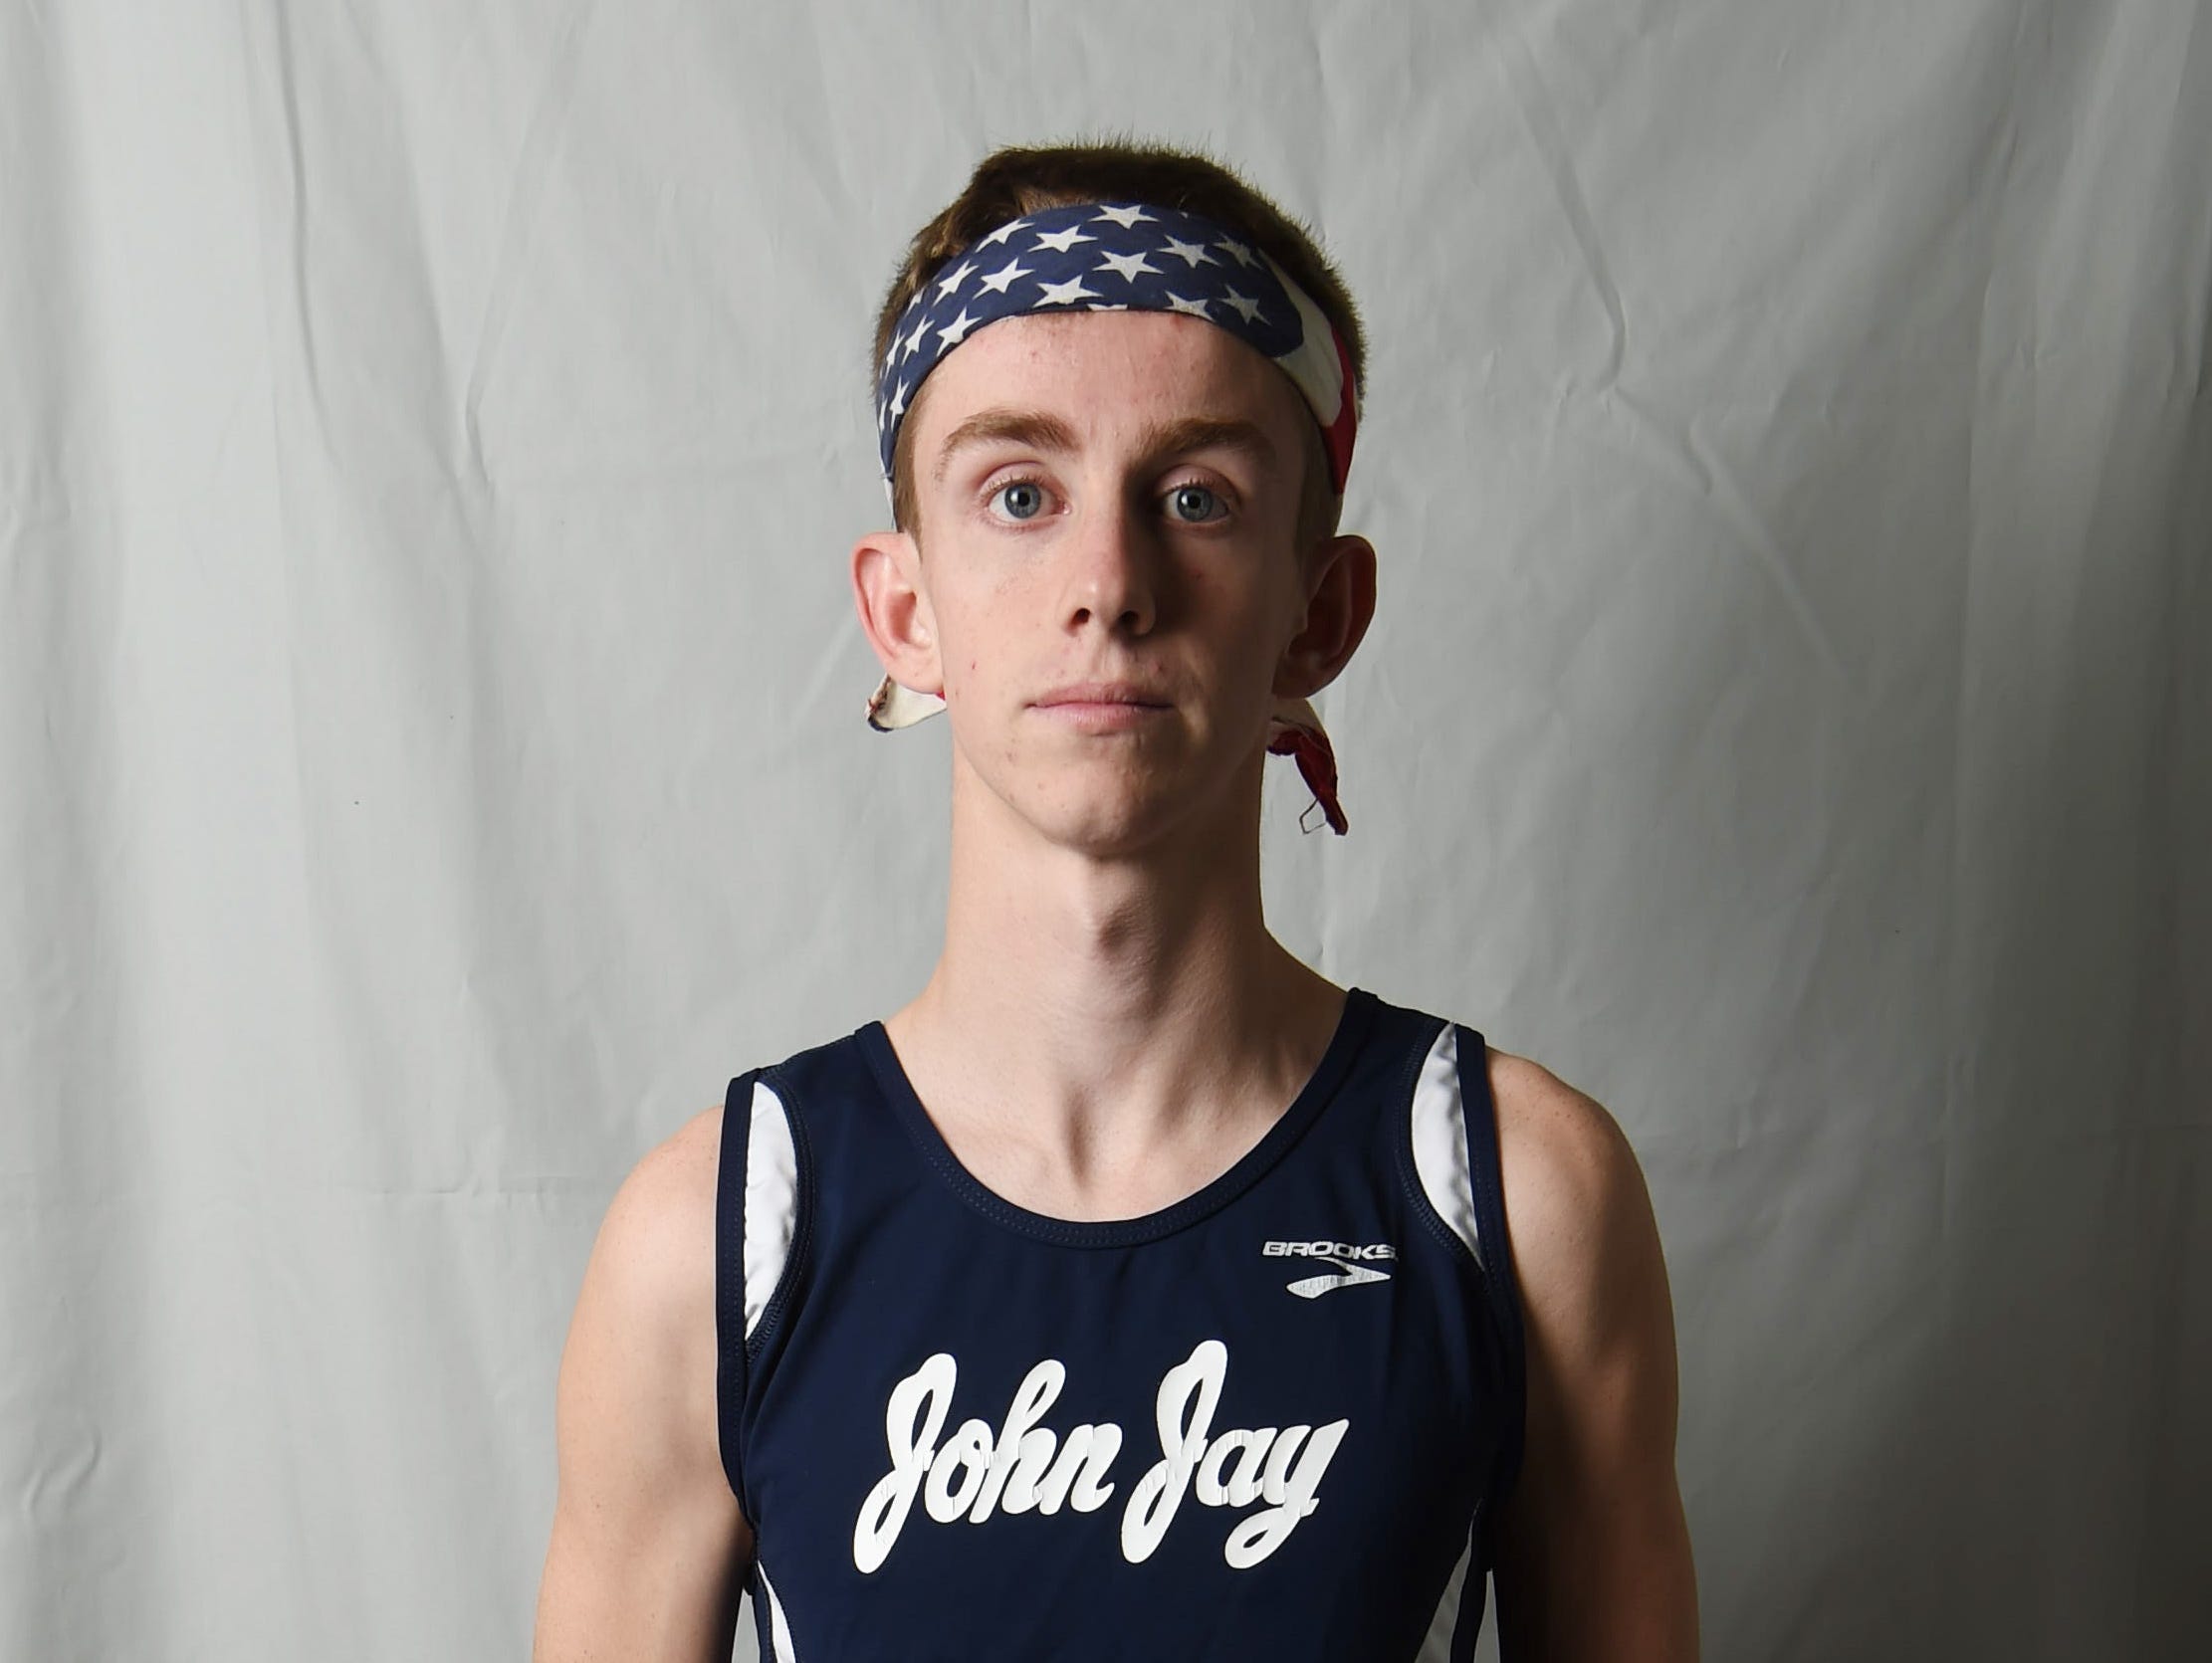 Sean Murray from John Jay High School is Boys Runner of the Year.